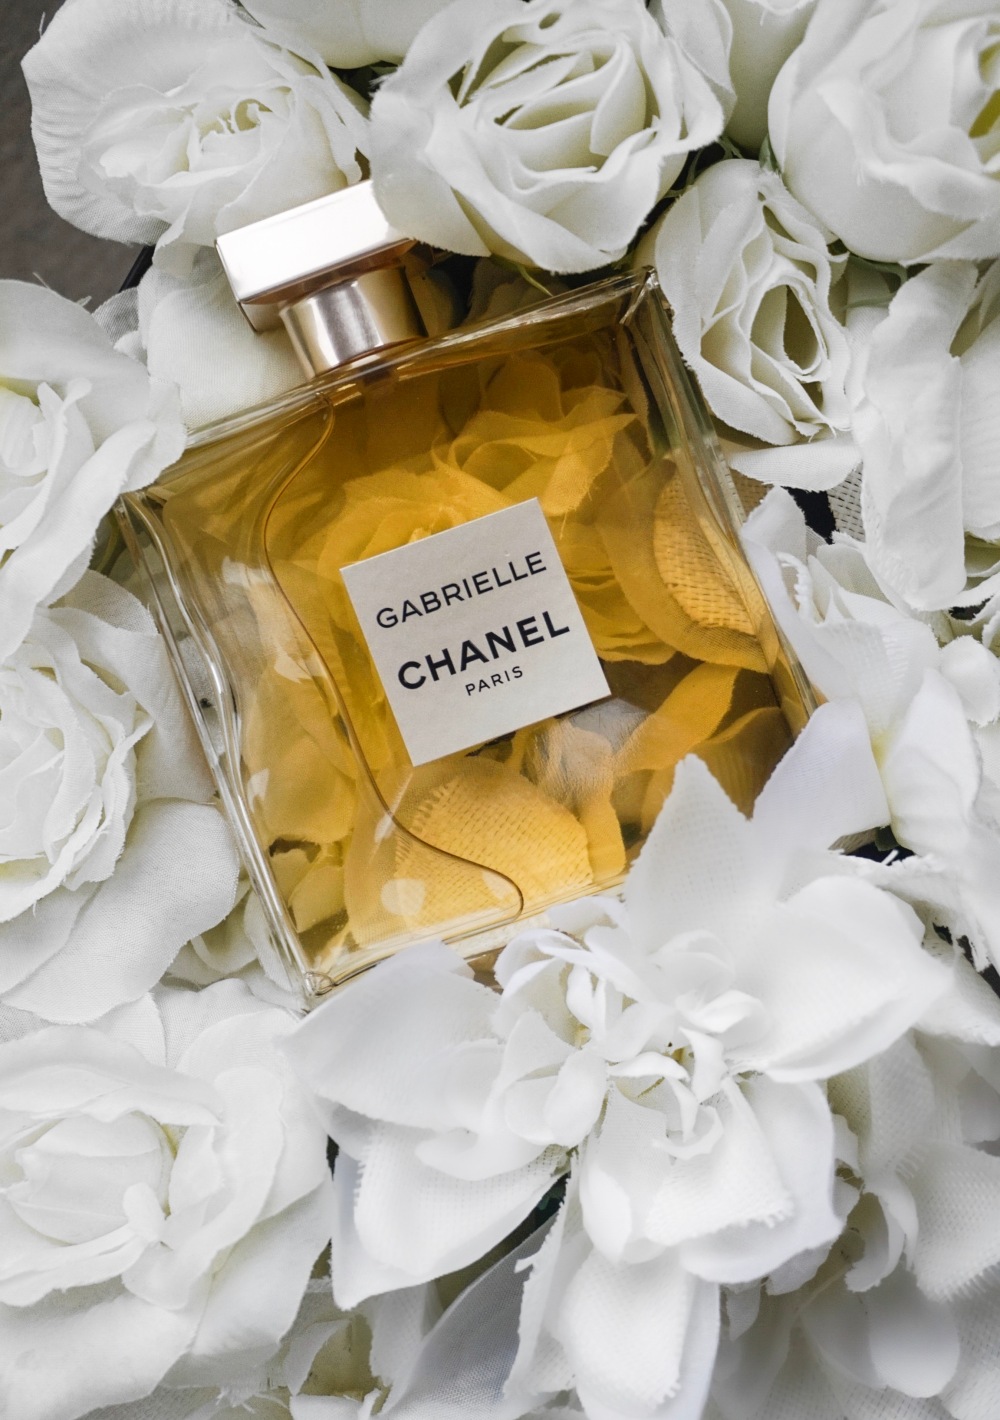 COCO Chanel Mademoiselle Parfum (Gabrielle Chanel) - New